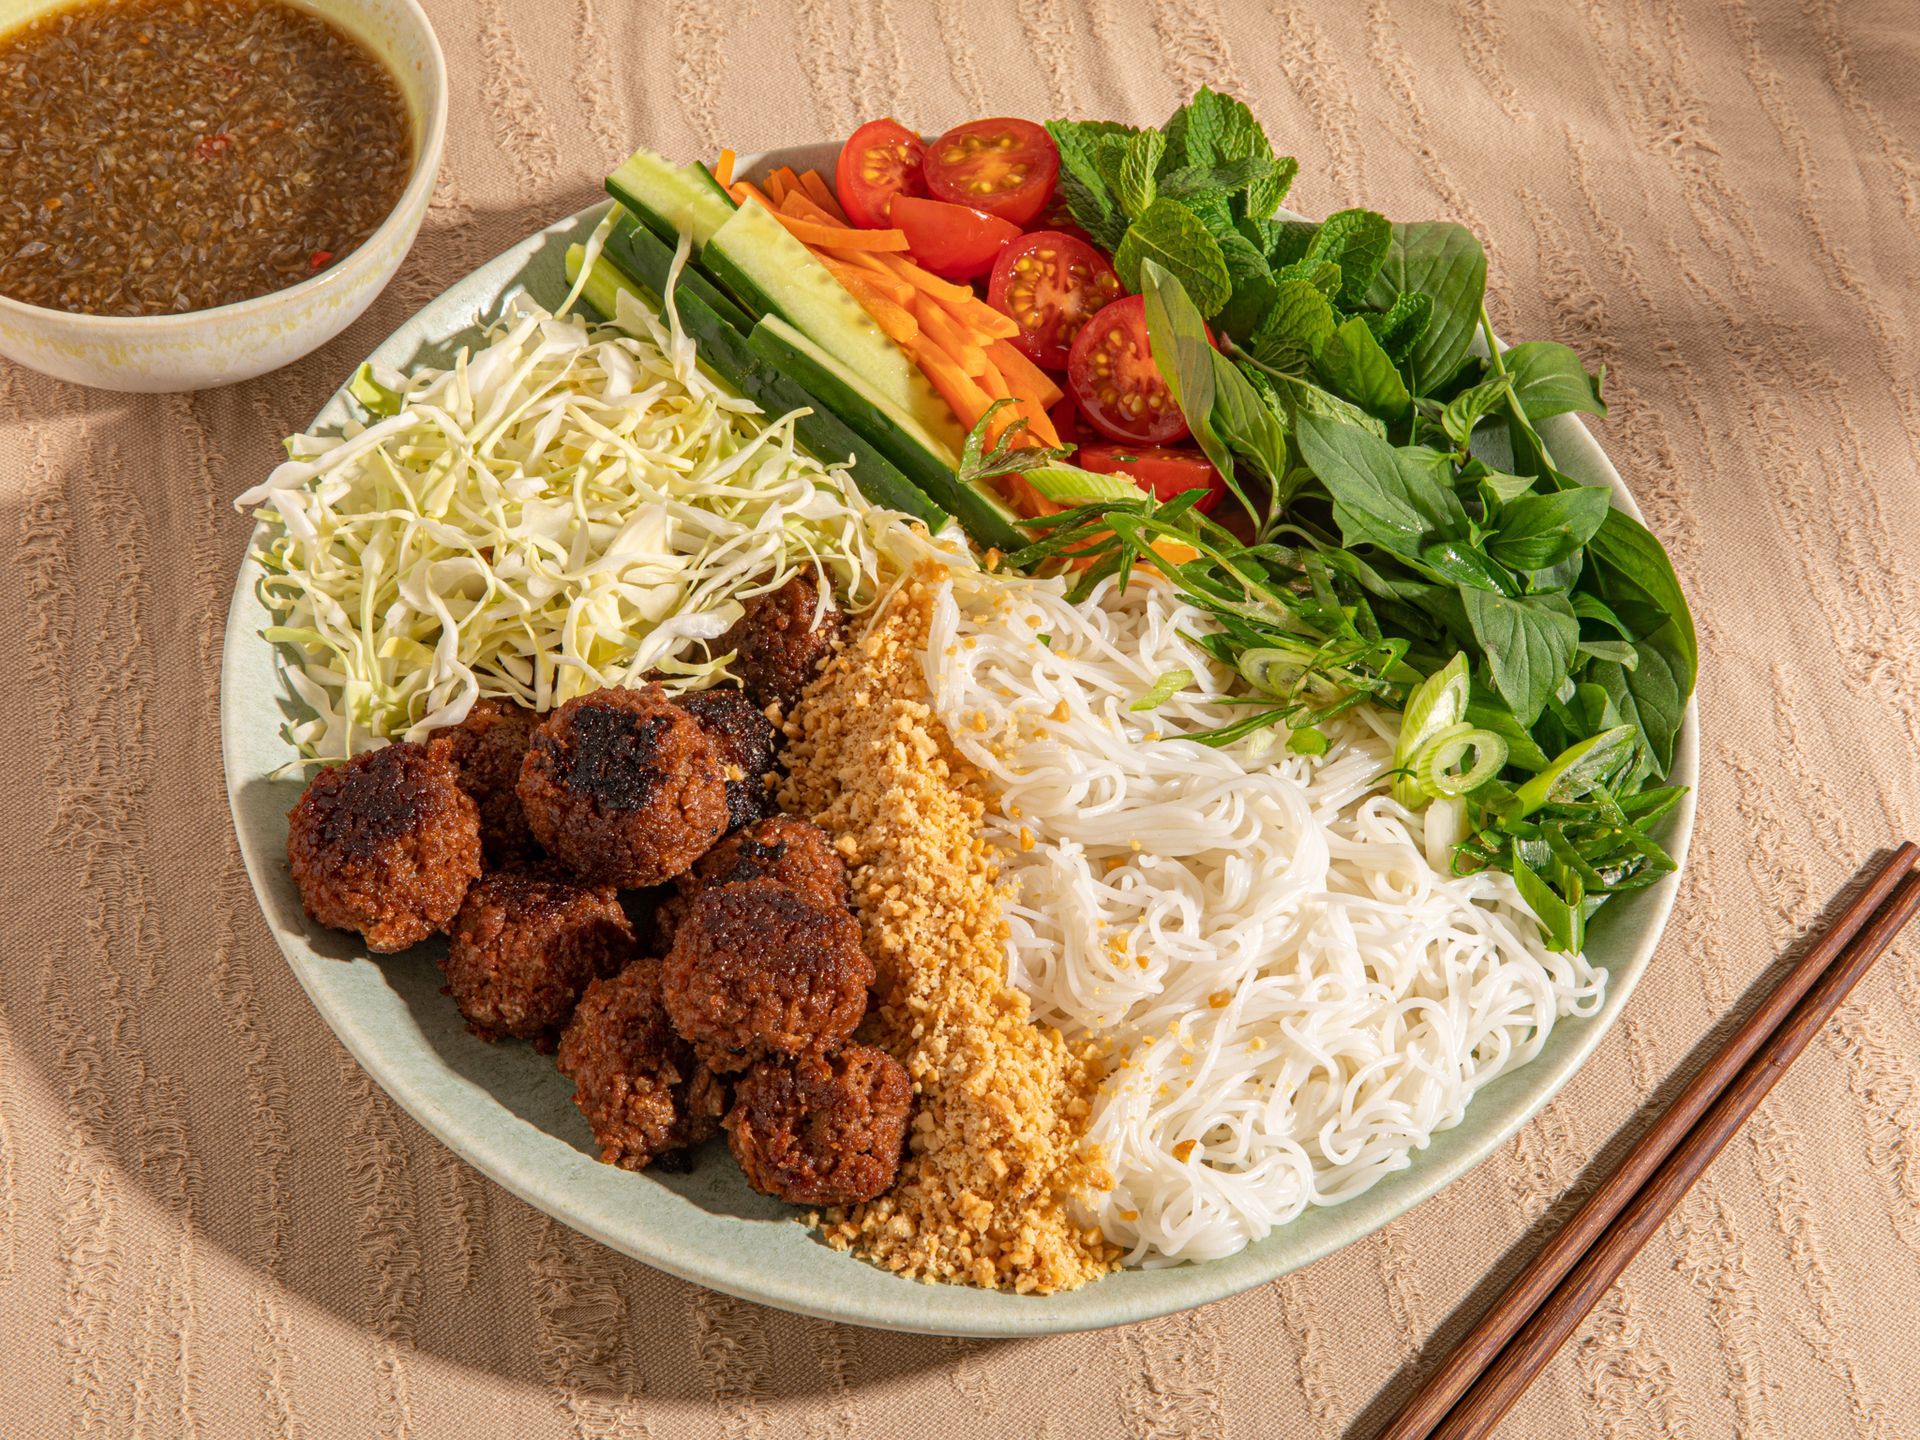 Rice noodle salad with vegan lemongrass meatballs